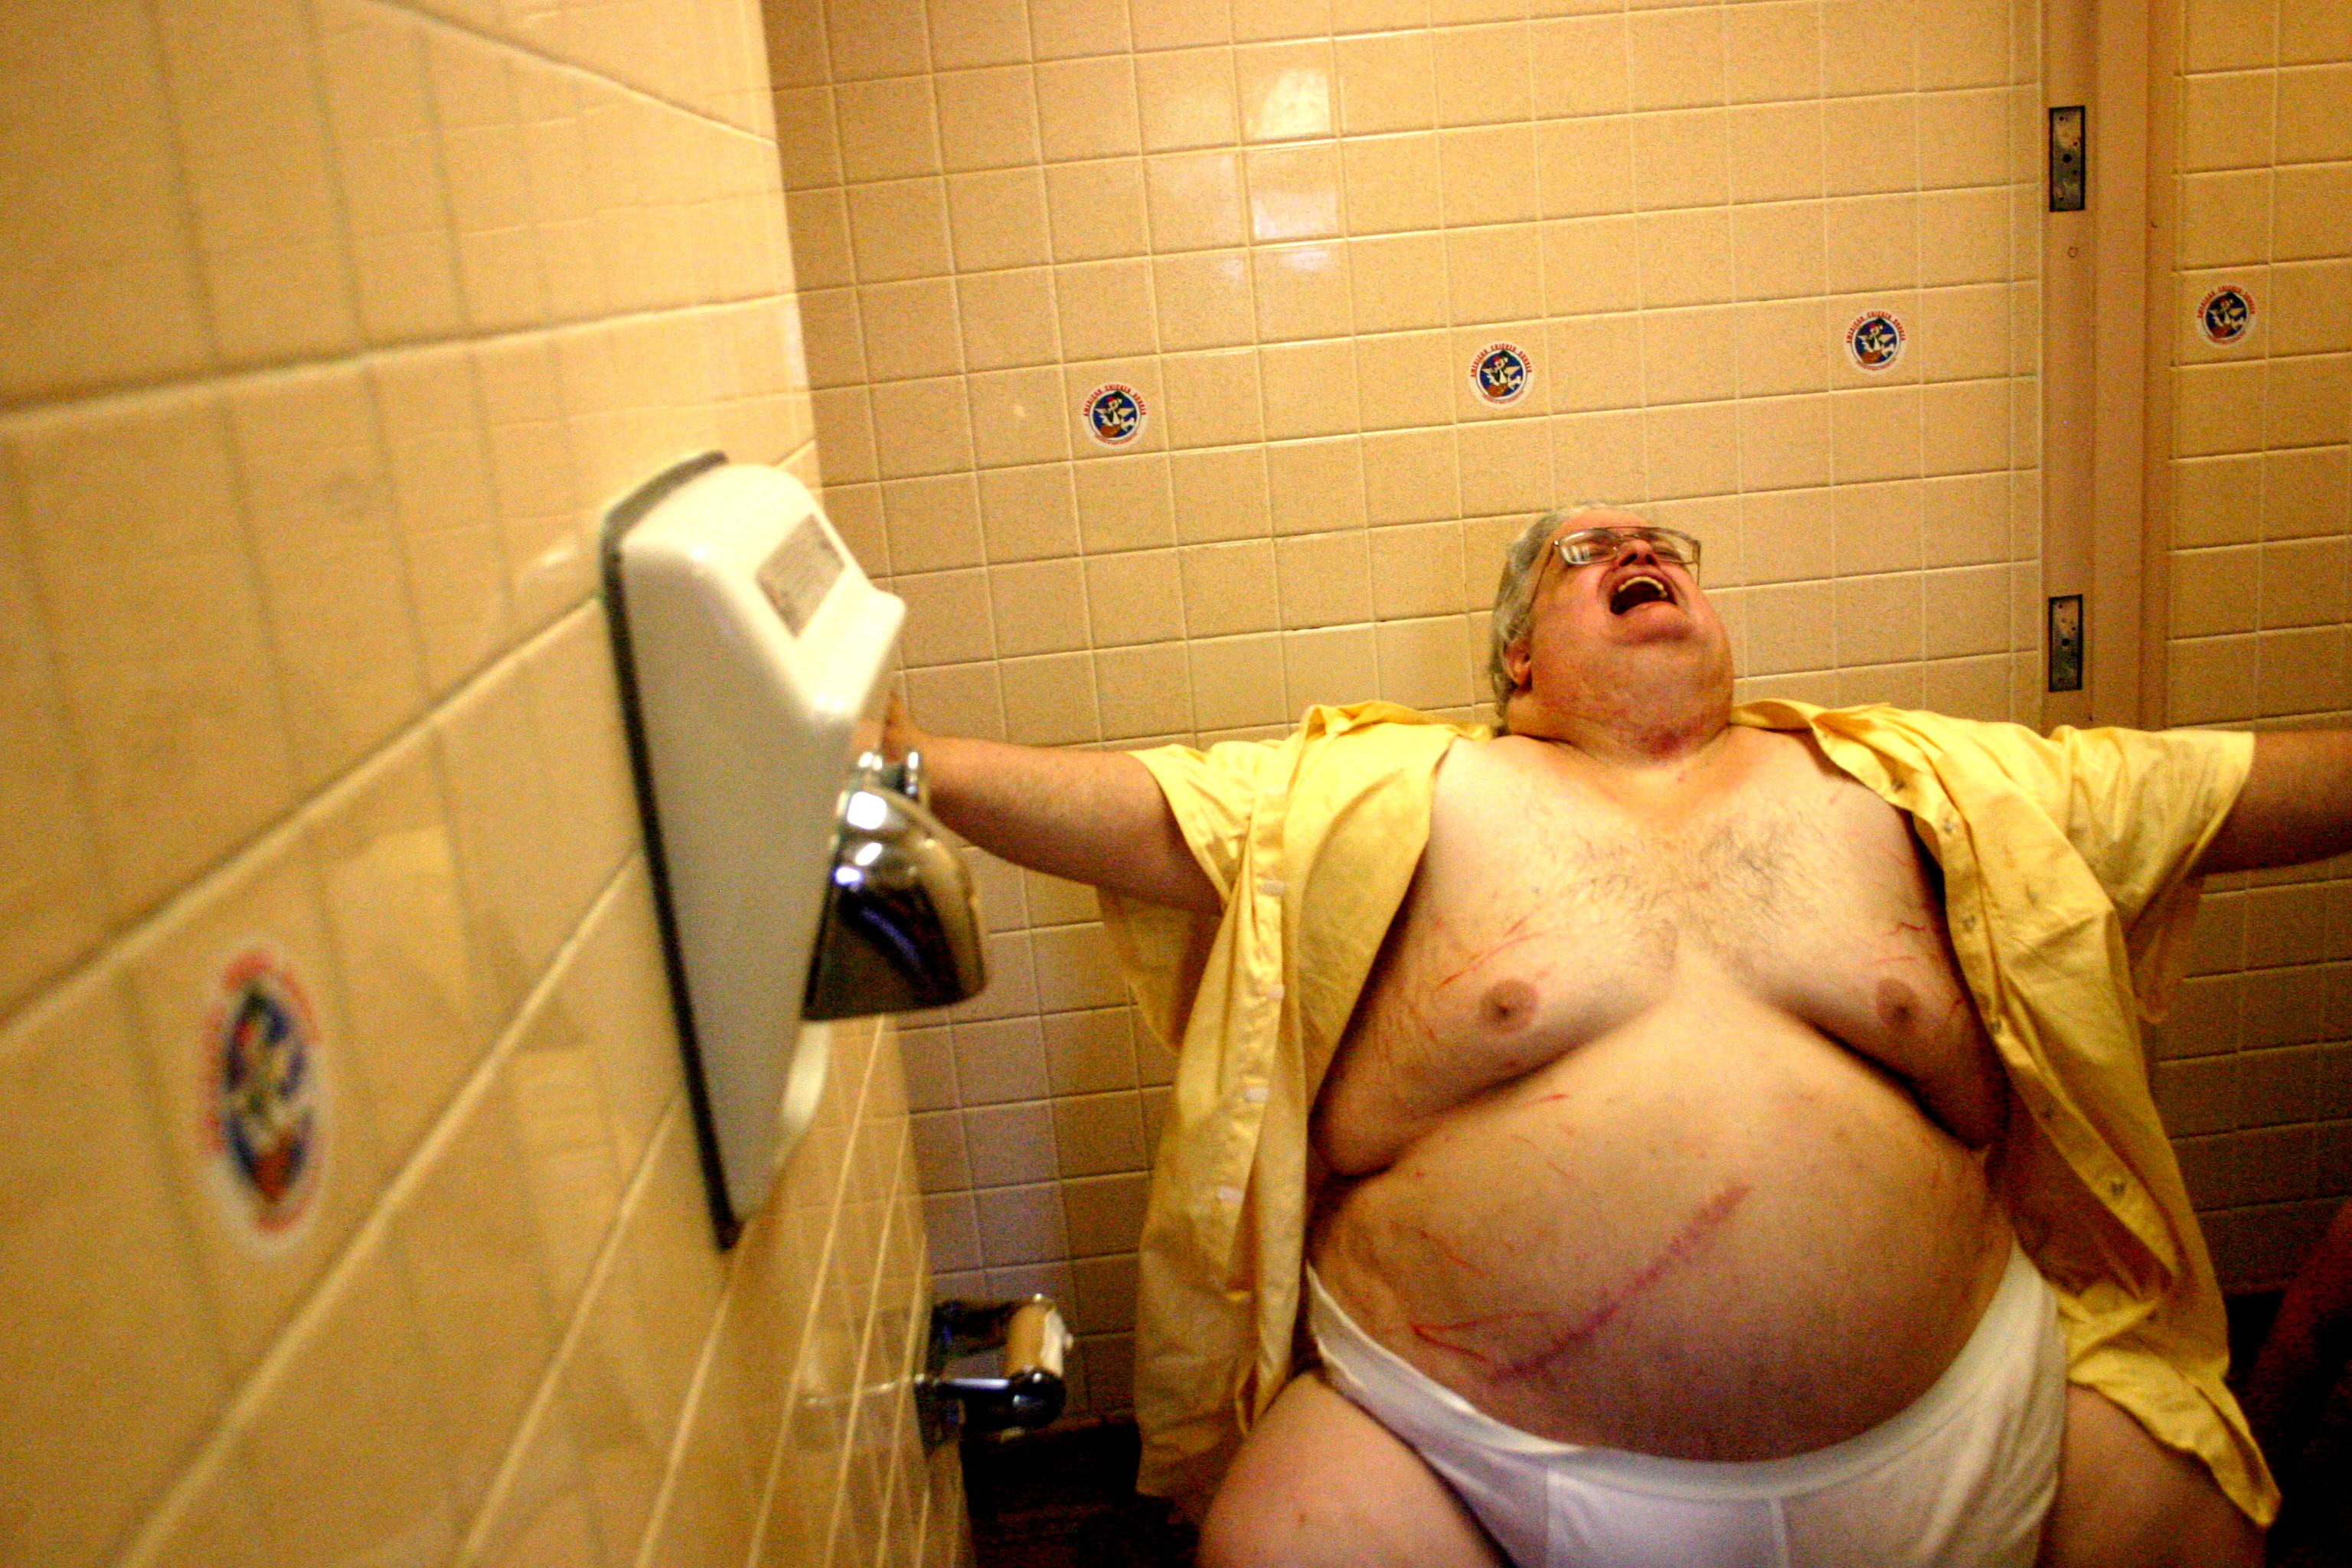 five star hotel secrets - guy pooping everywhere